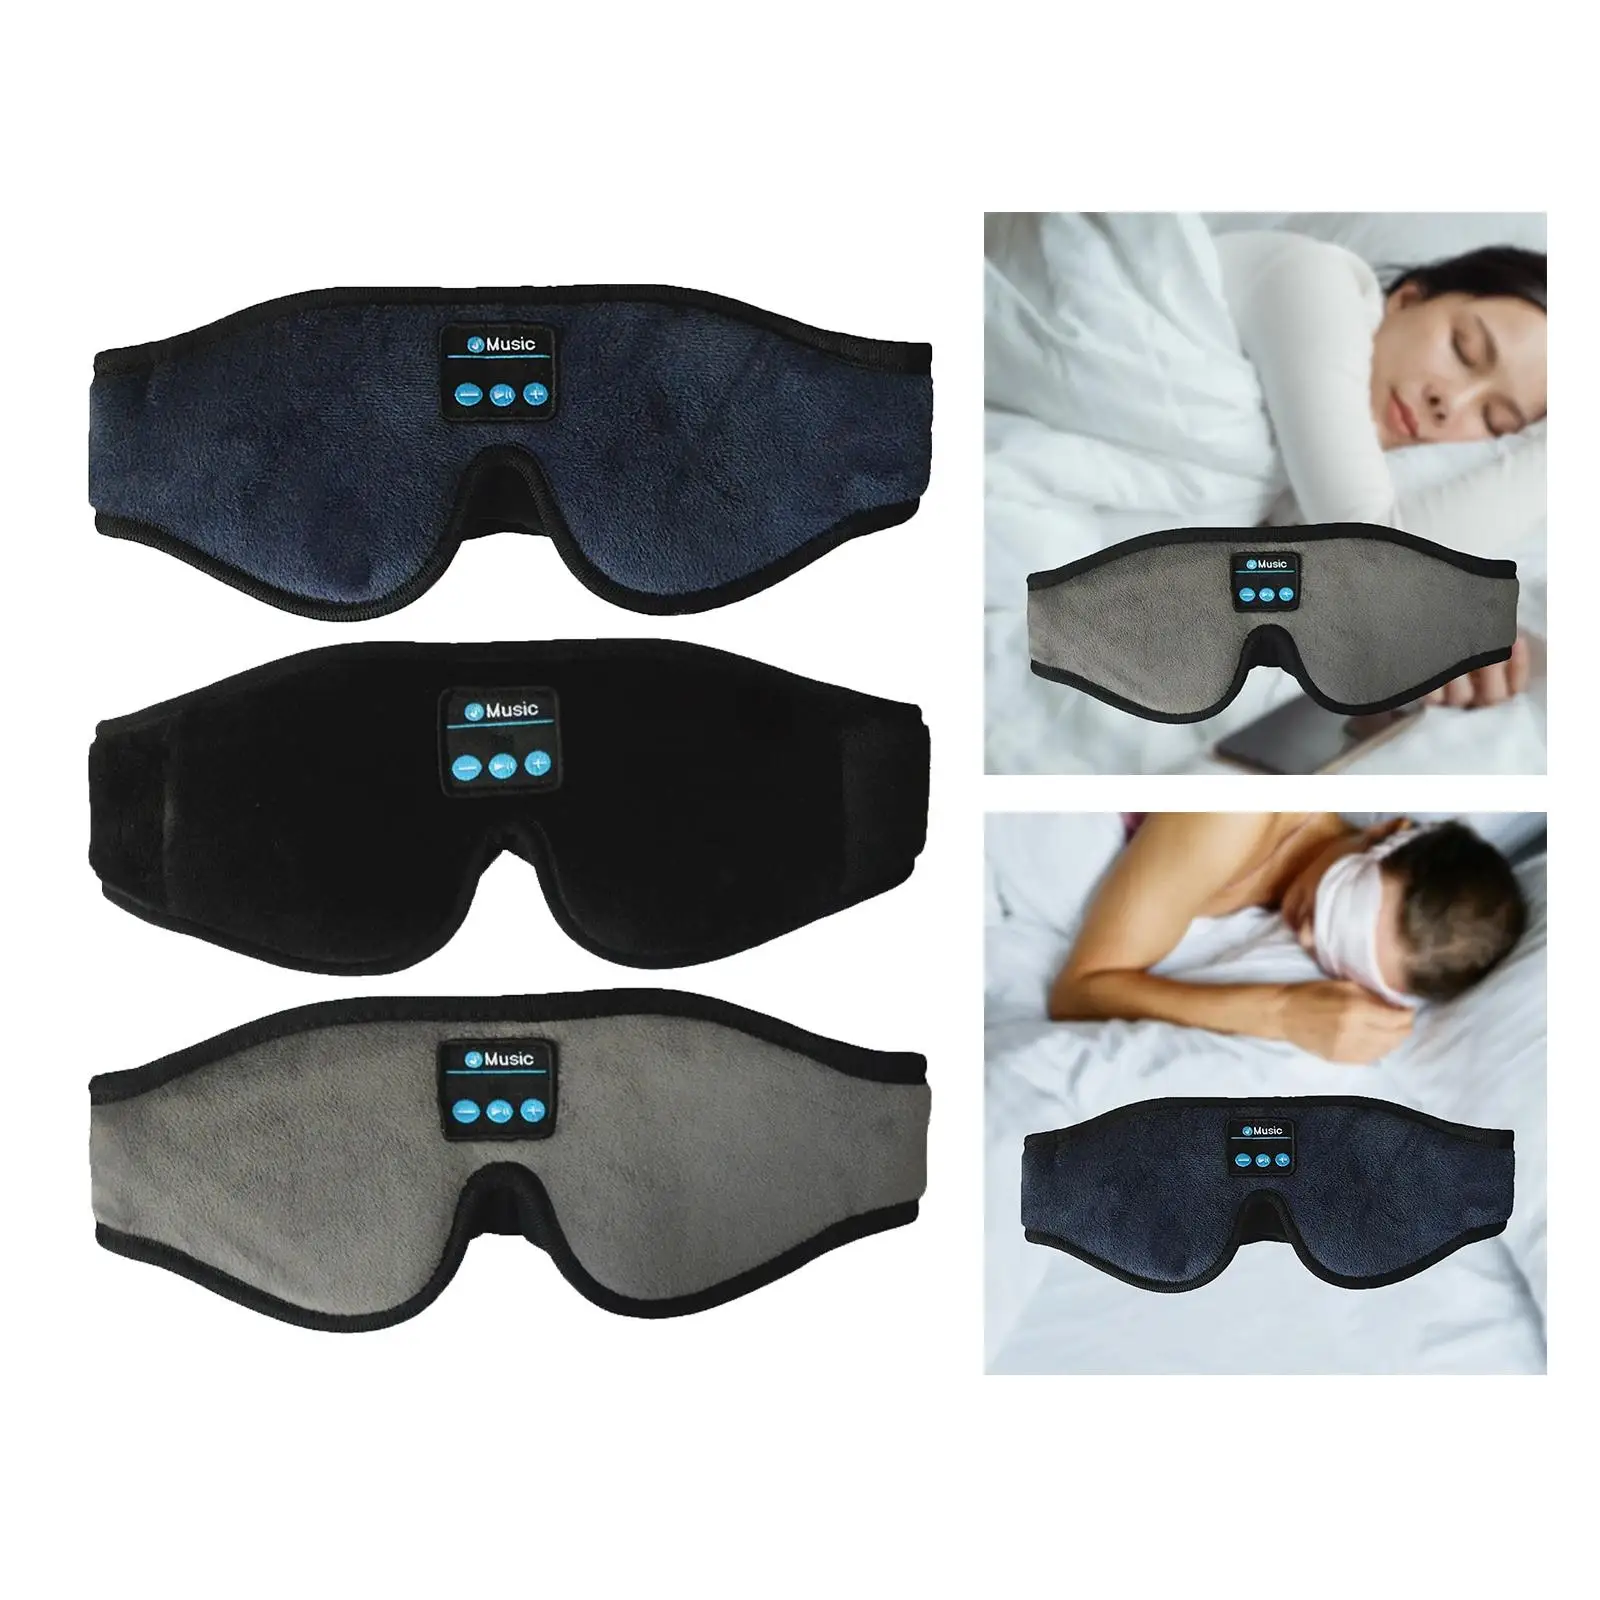  Bluetooth 5.0 Unique Gifts Headband Bluetooth Eye  for Meditation Sleeping Audiobooks Office Men Women